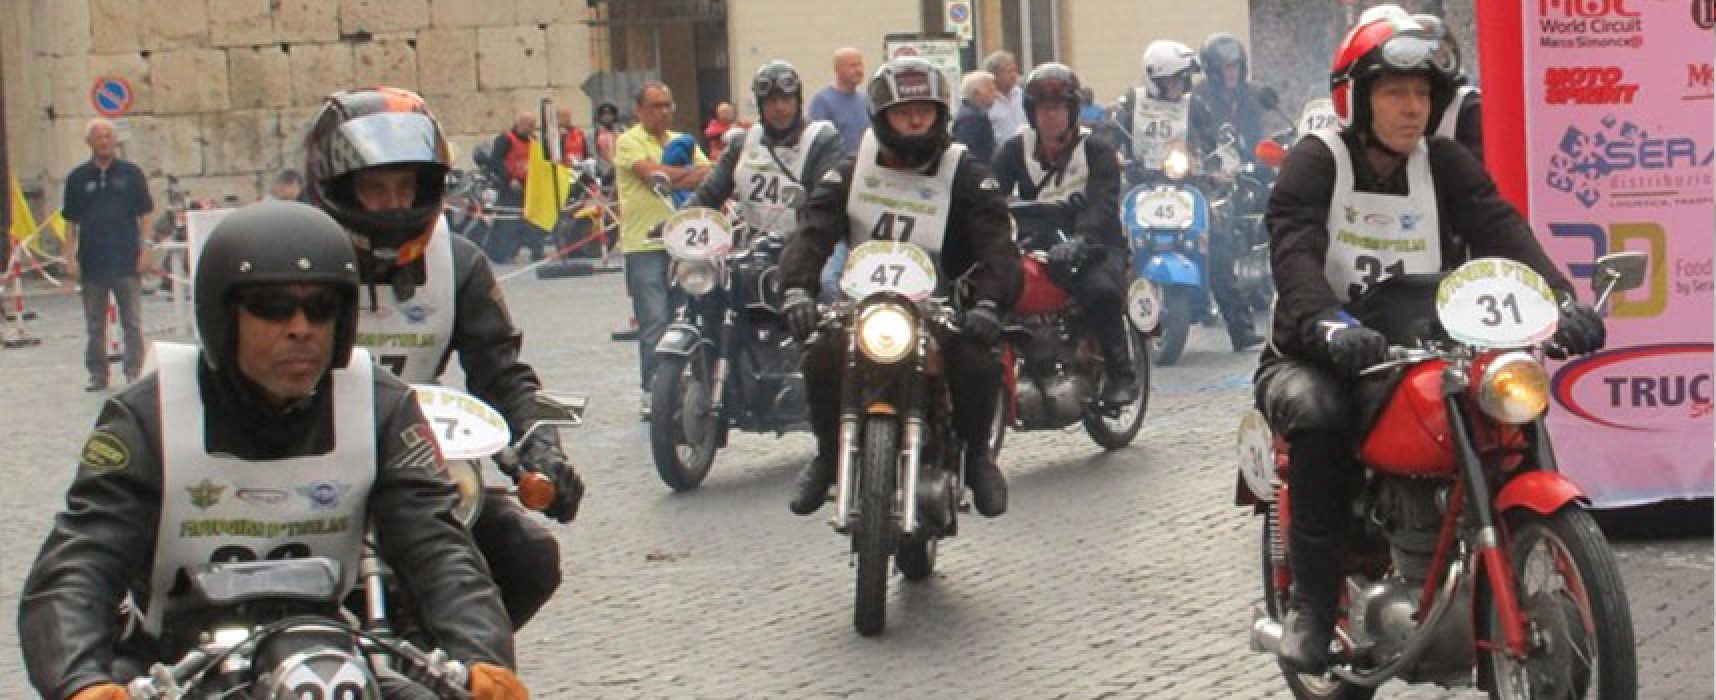 Rievocazione Storica del Motogiro d’Italia toccherà Bisceglie, INFO su chiusura traffico